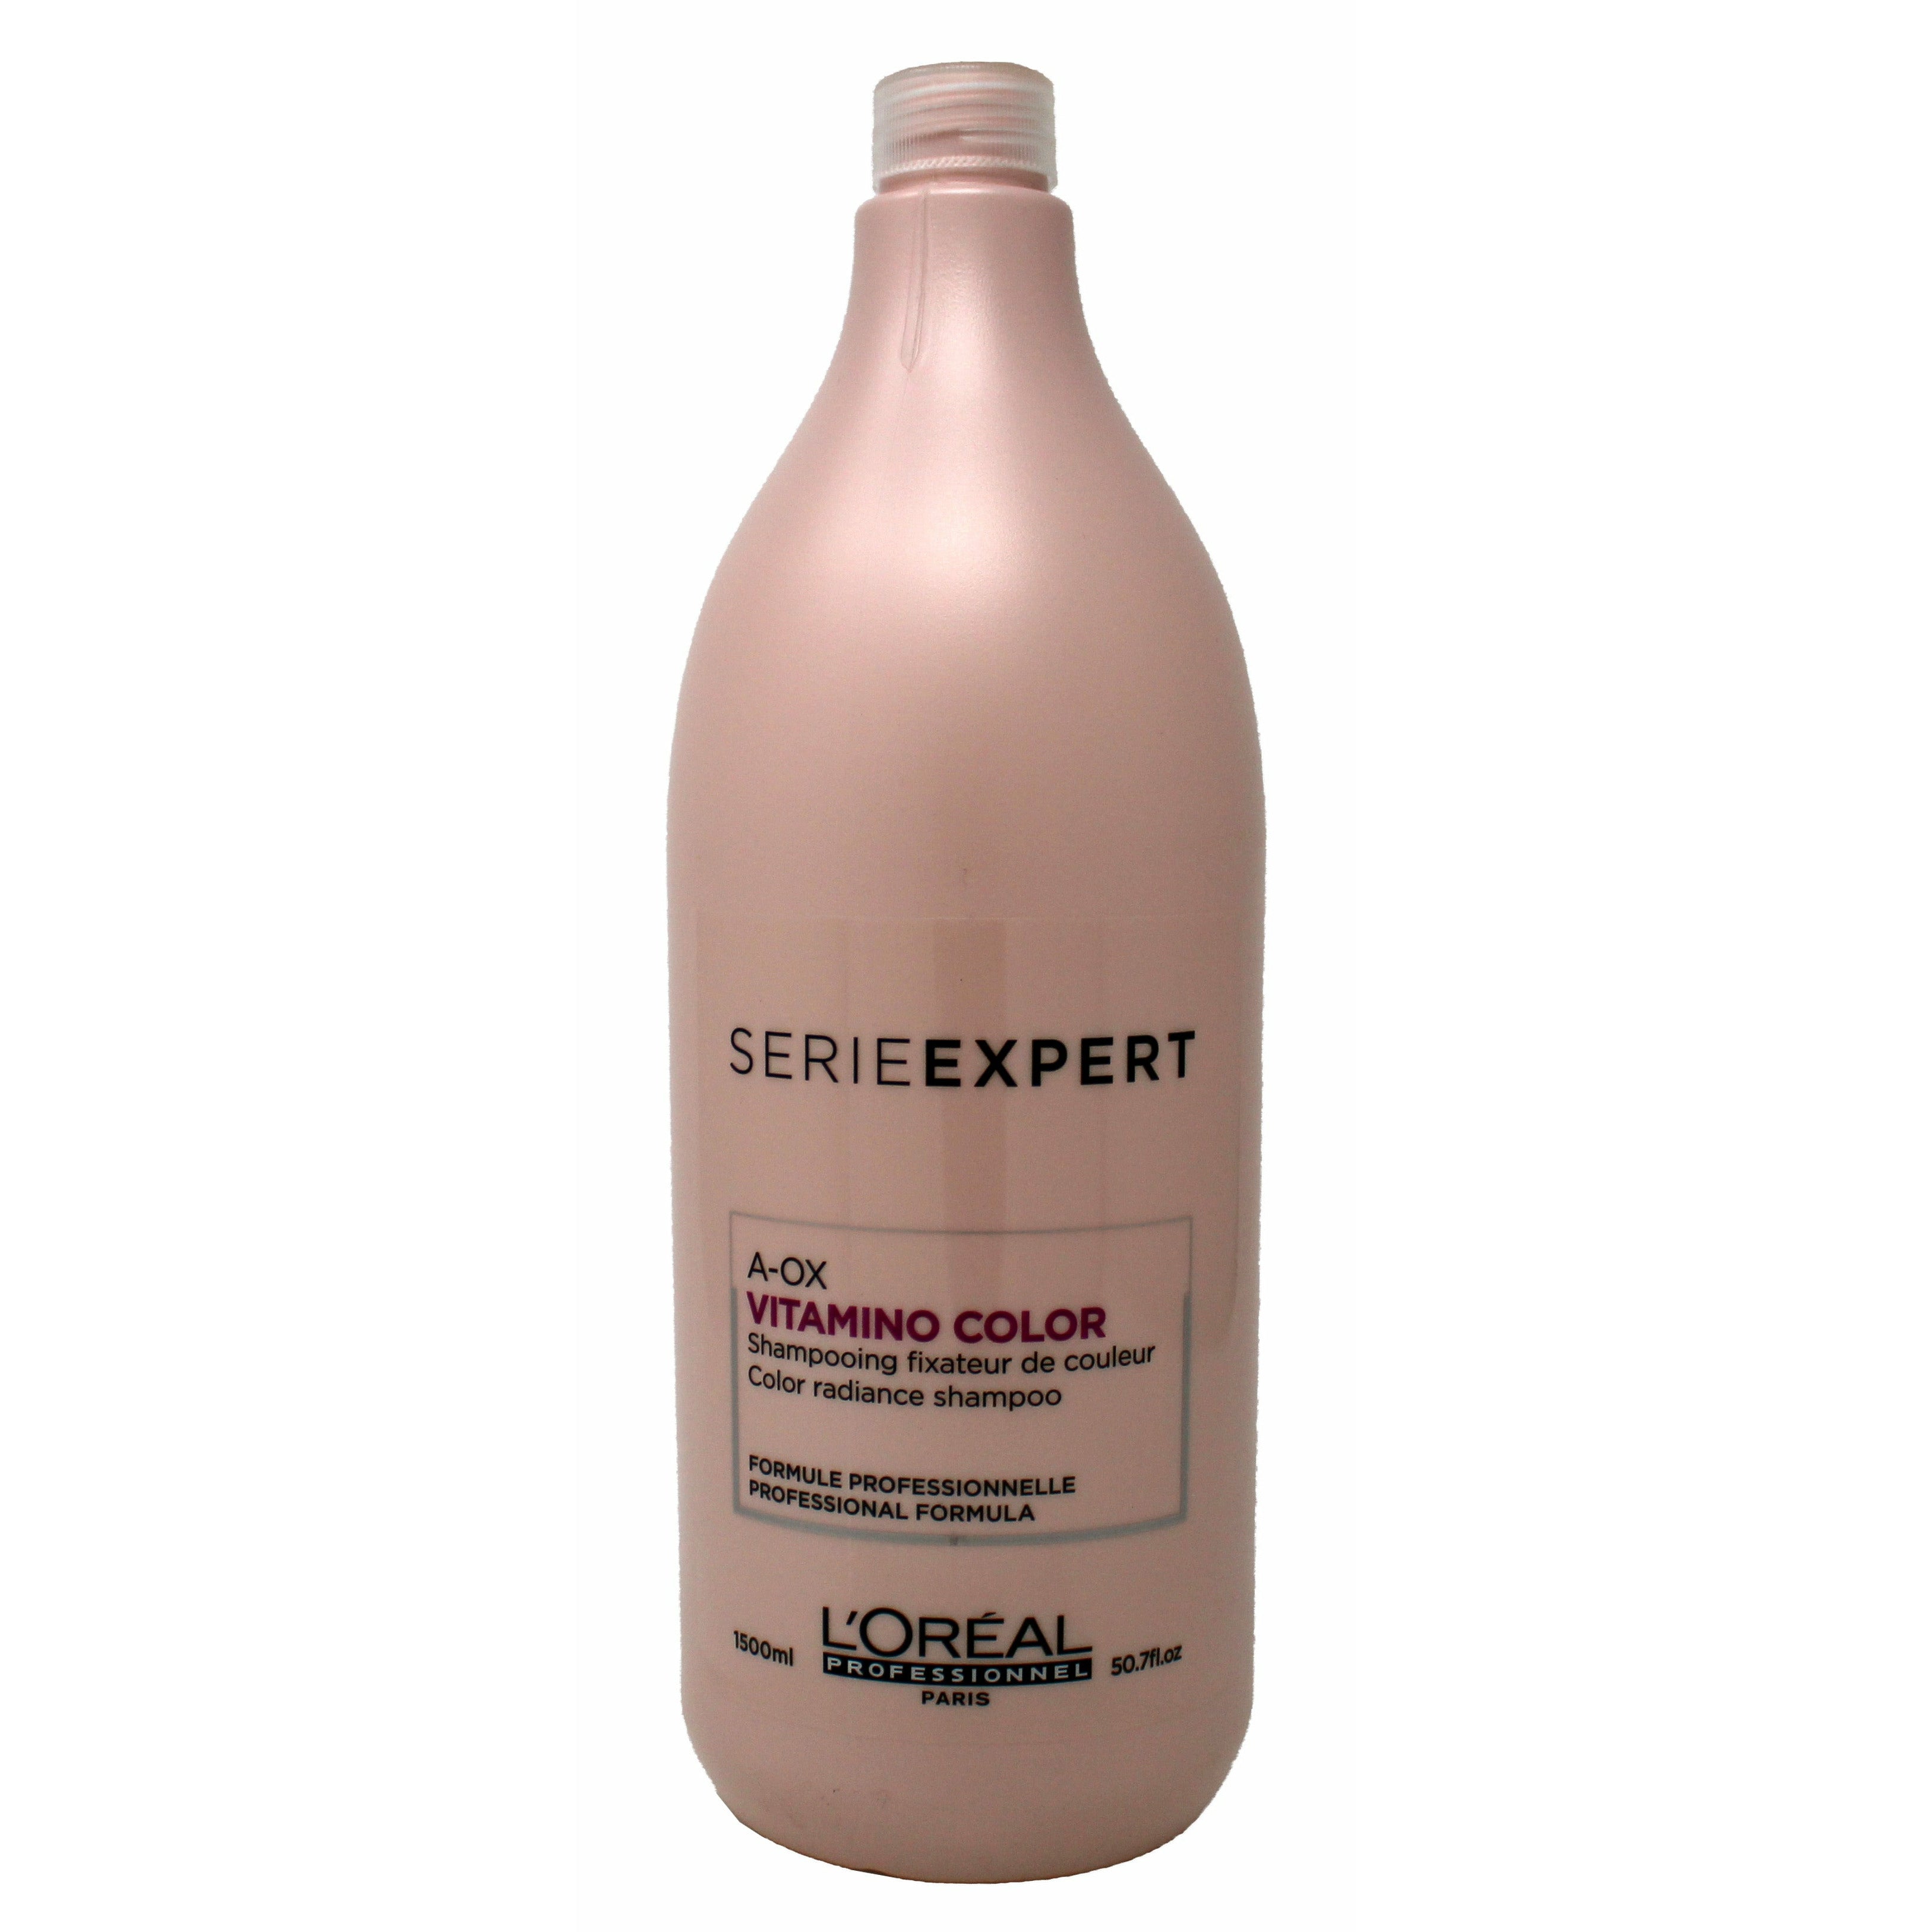 Serie Expert Vitamino Color A-OX Shampoo – Hair Care & Beauty